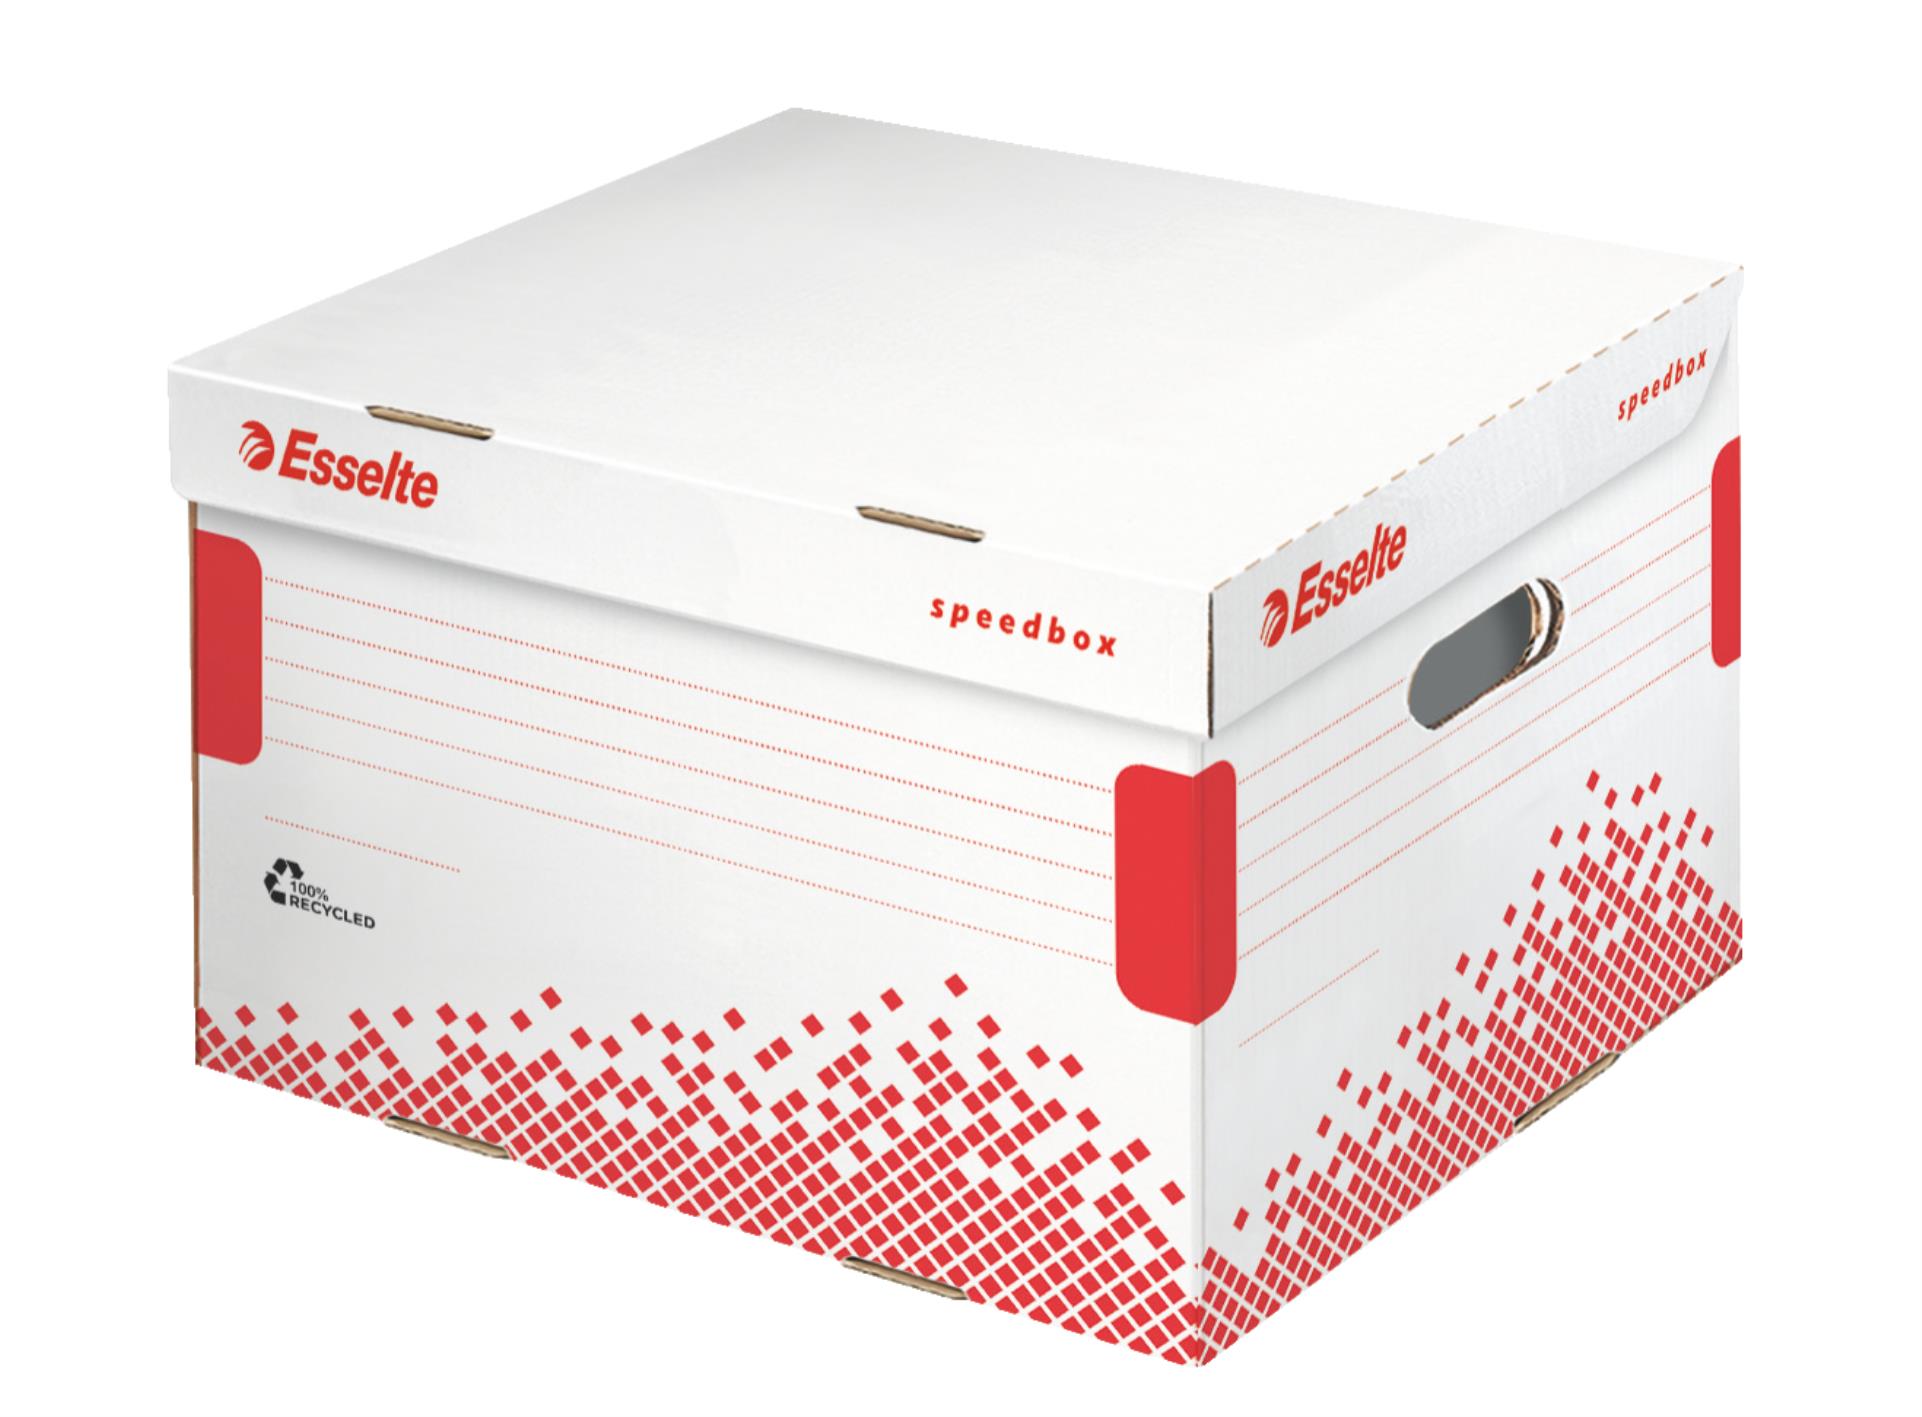 Archivační kontejner Esselte Speedbox - velikost L